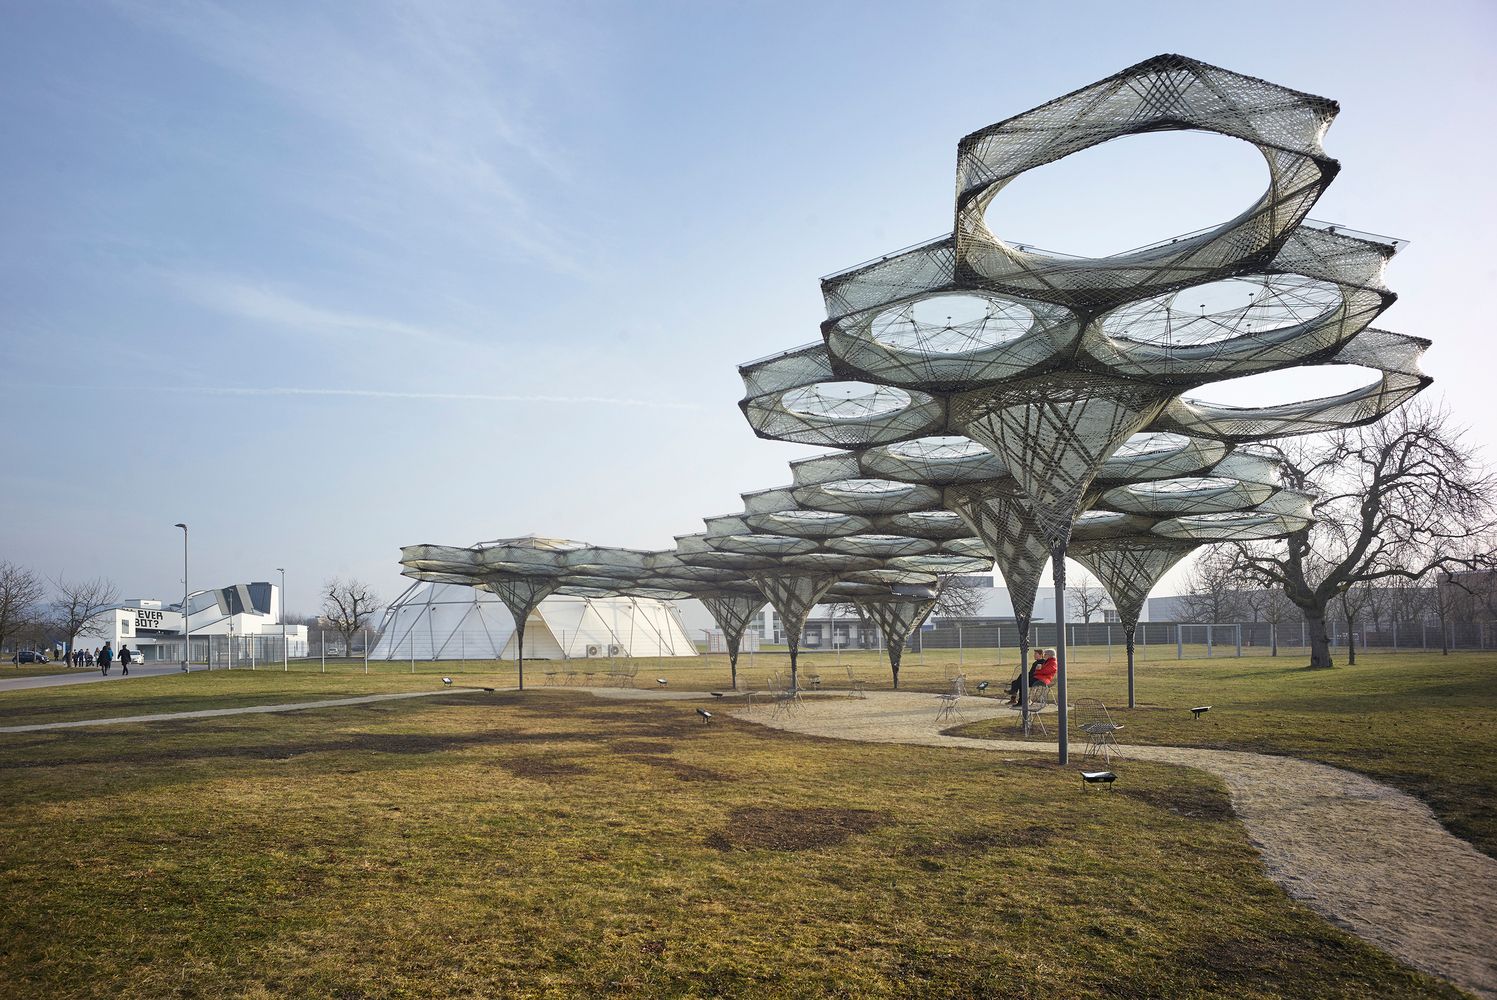 Elytra Filament Pavilion made from composite building materials